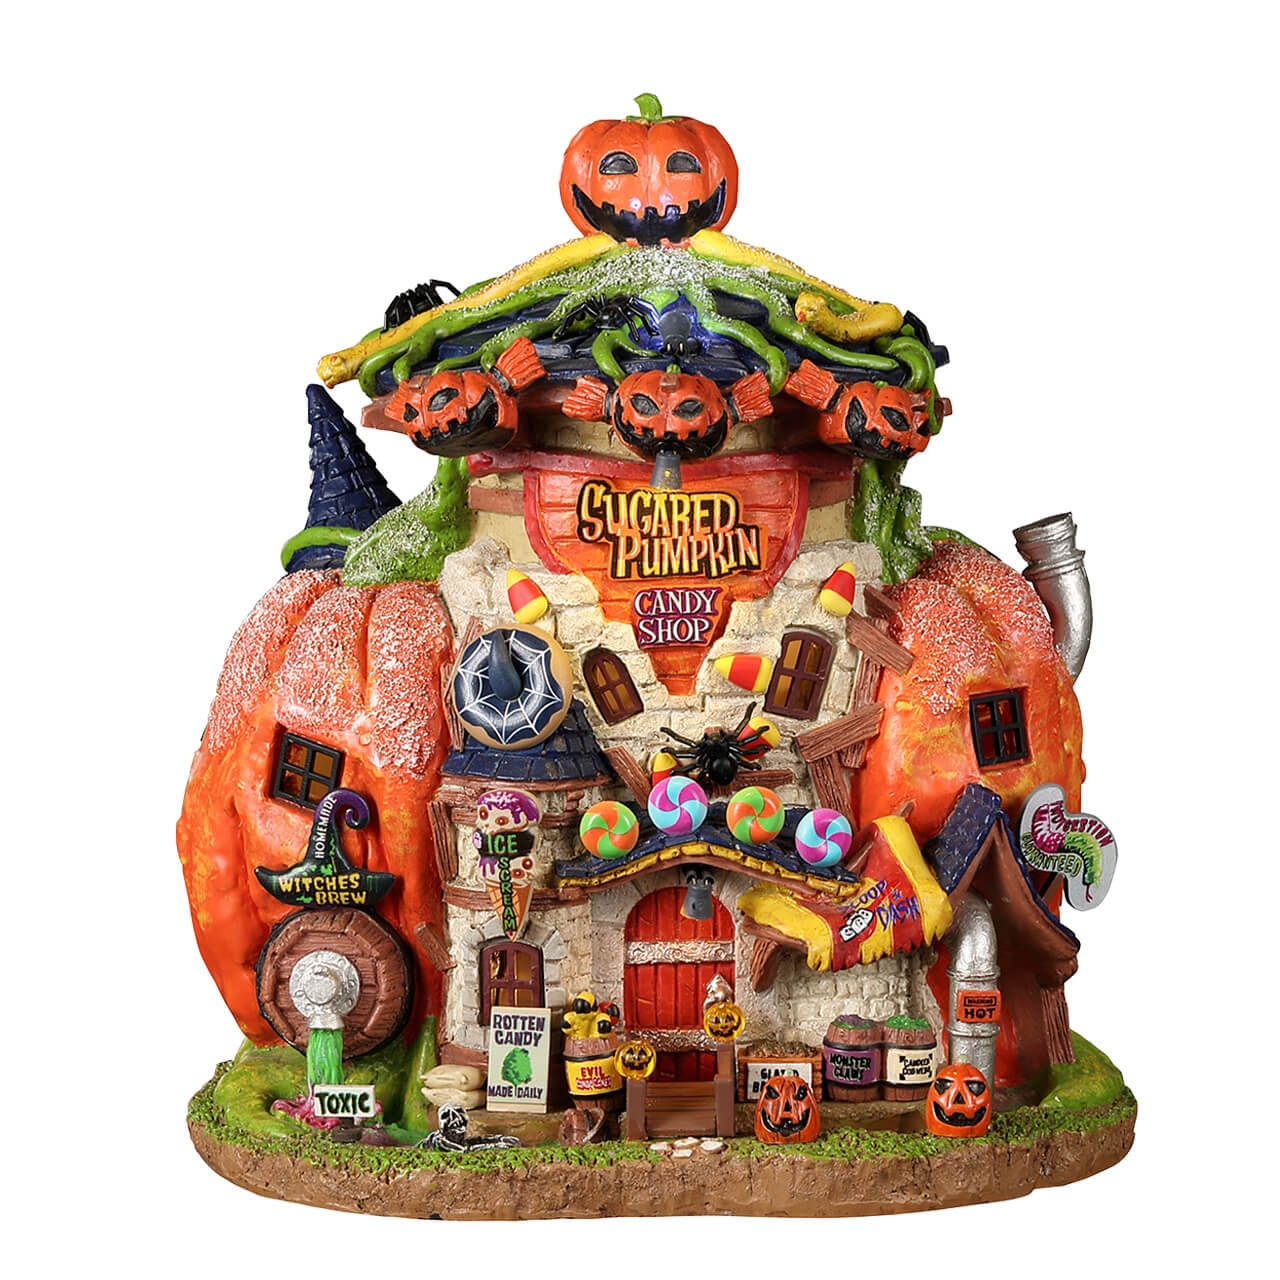 Lemax 25855 Sugared Pumpkin Candy Shop